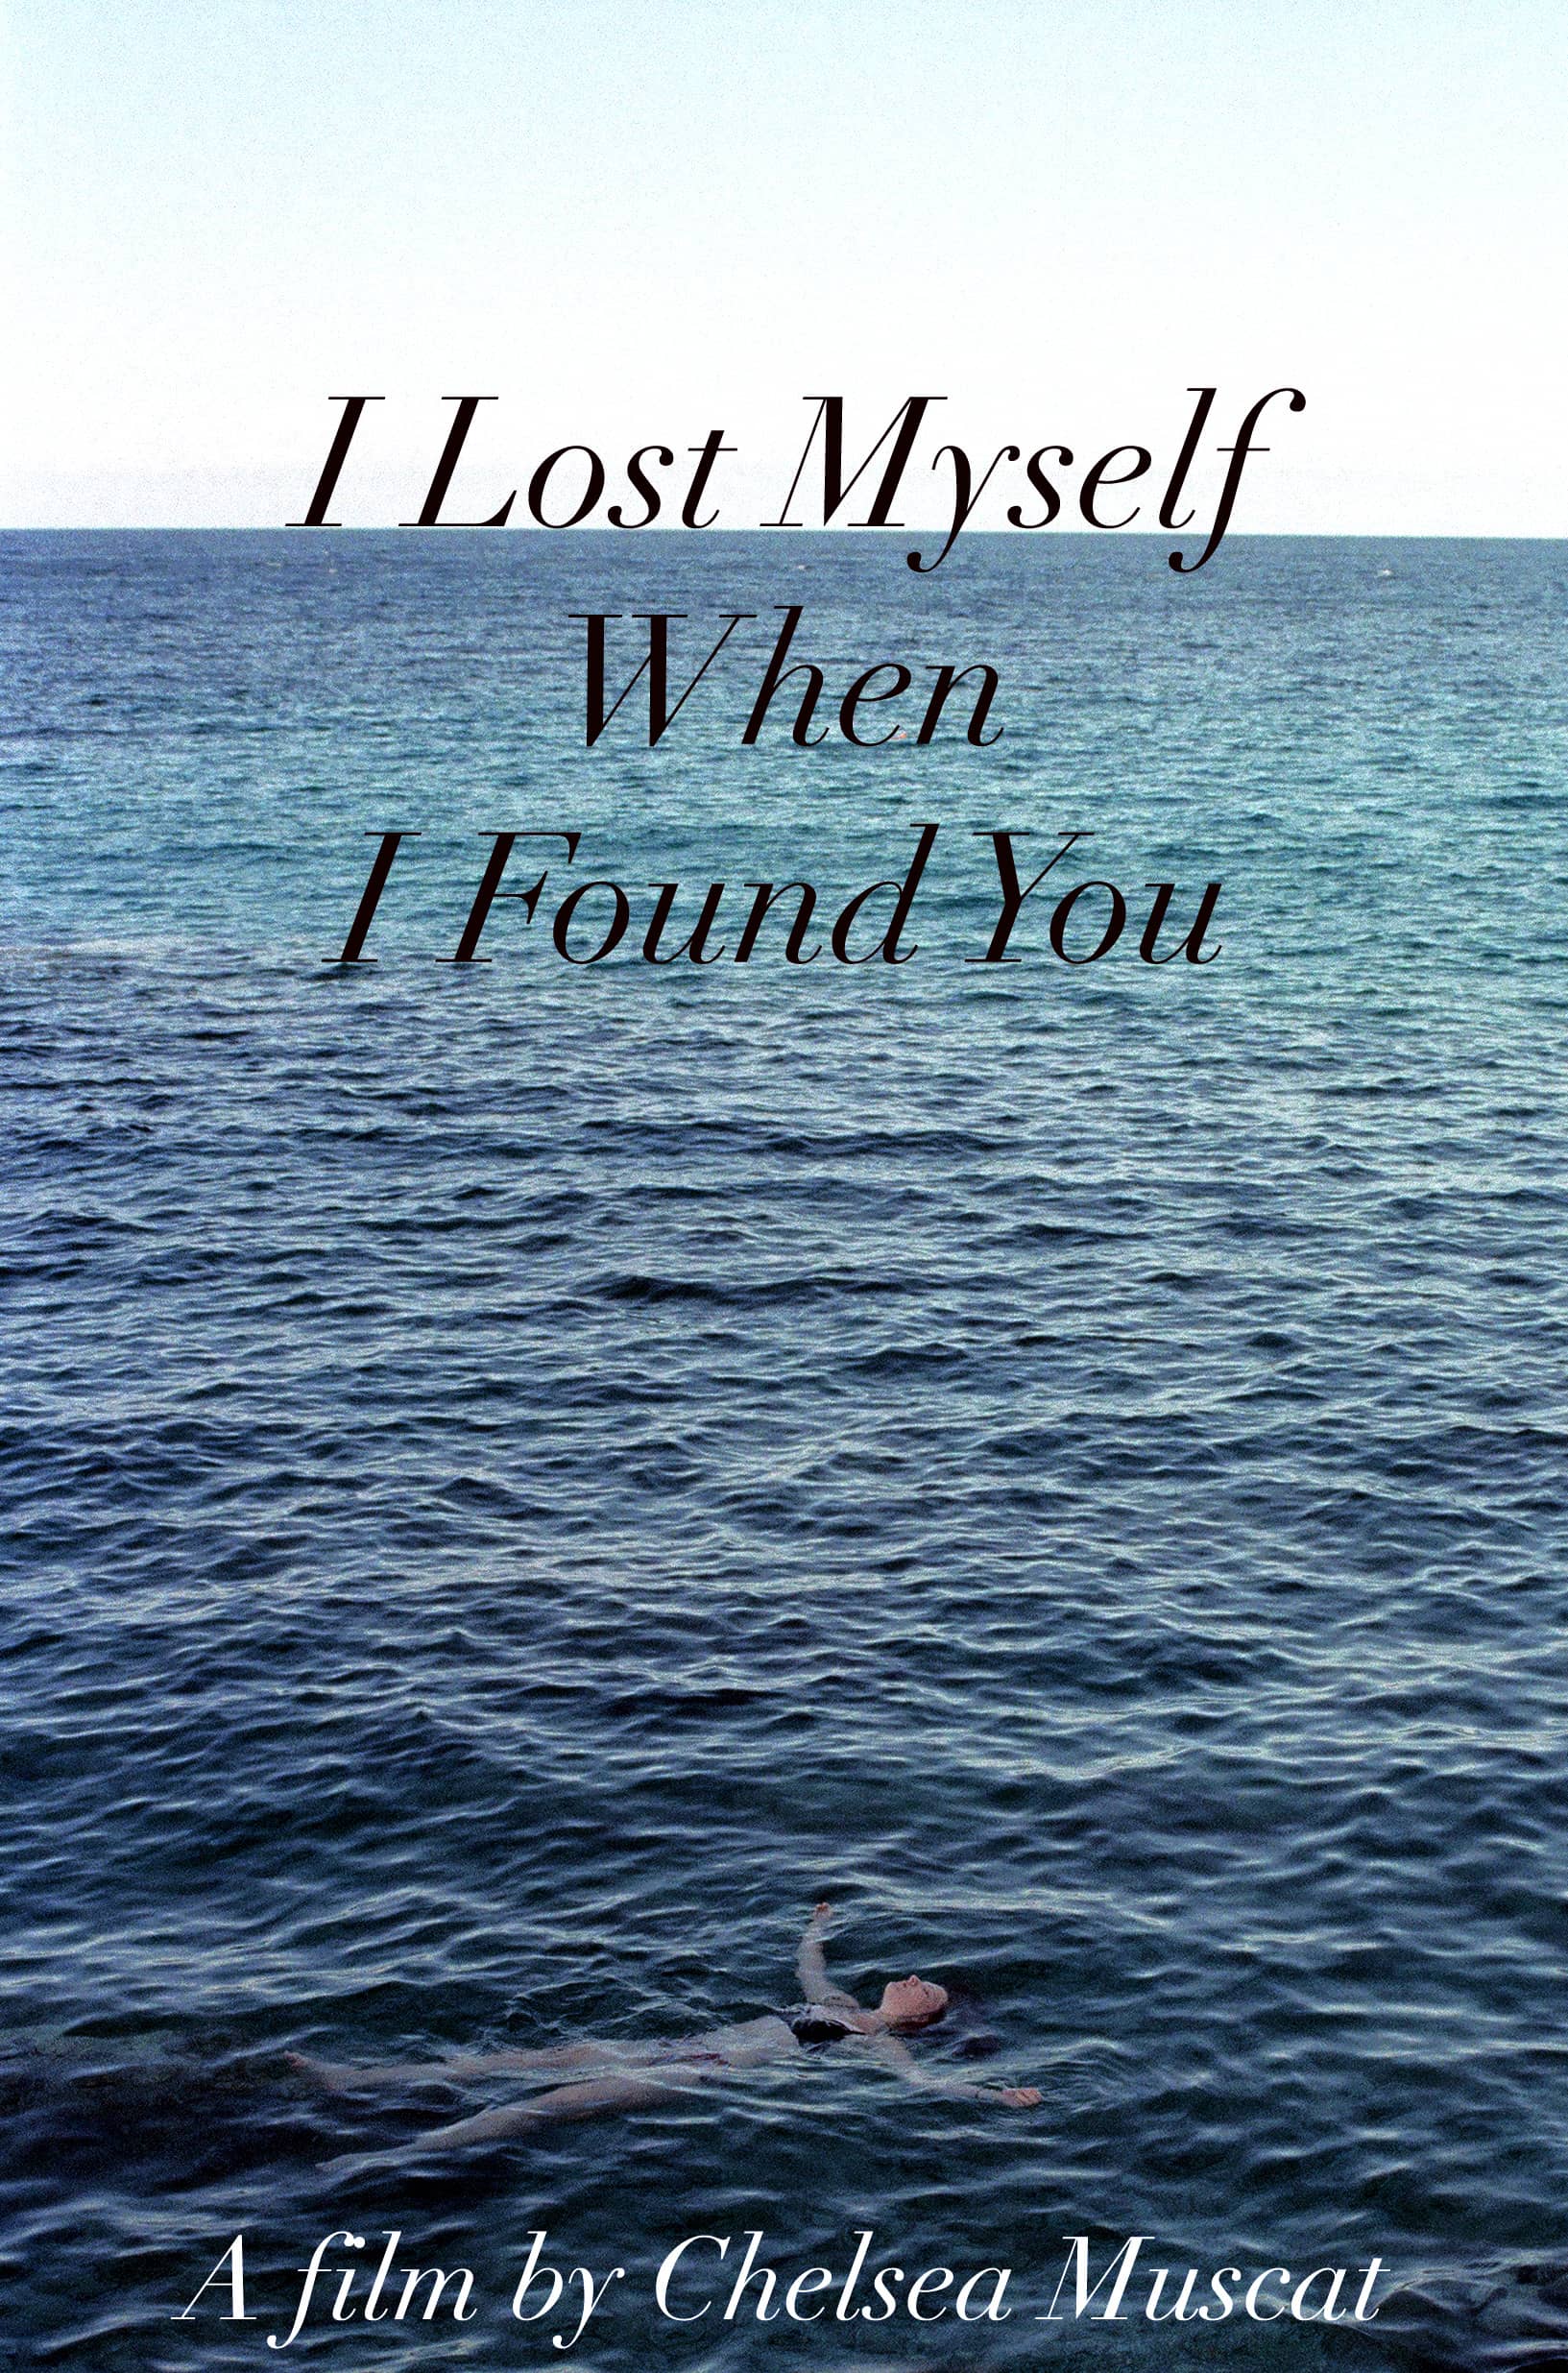 I lost myself when I found you